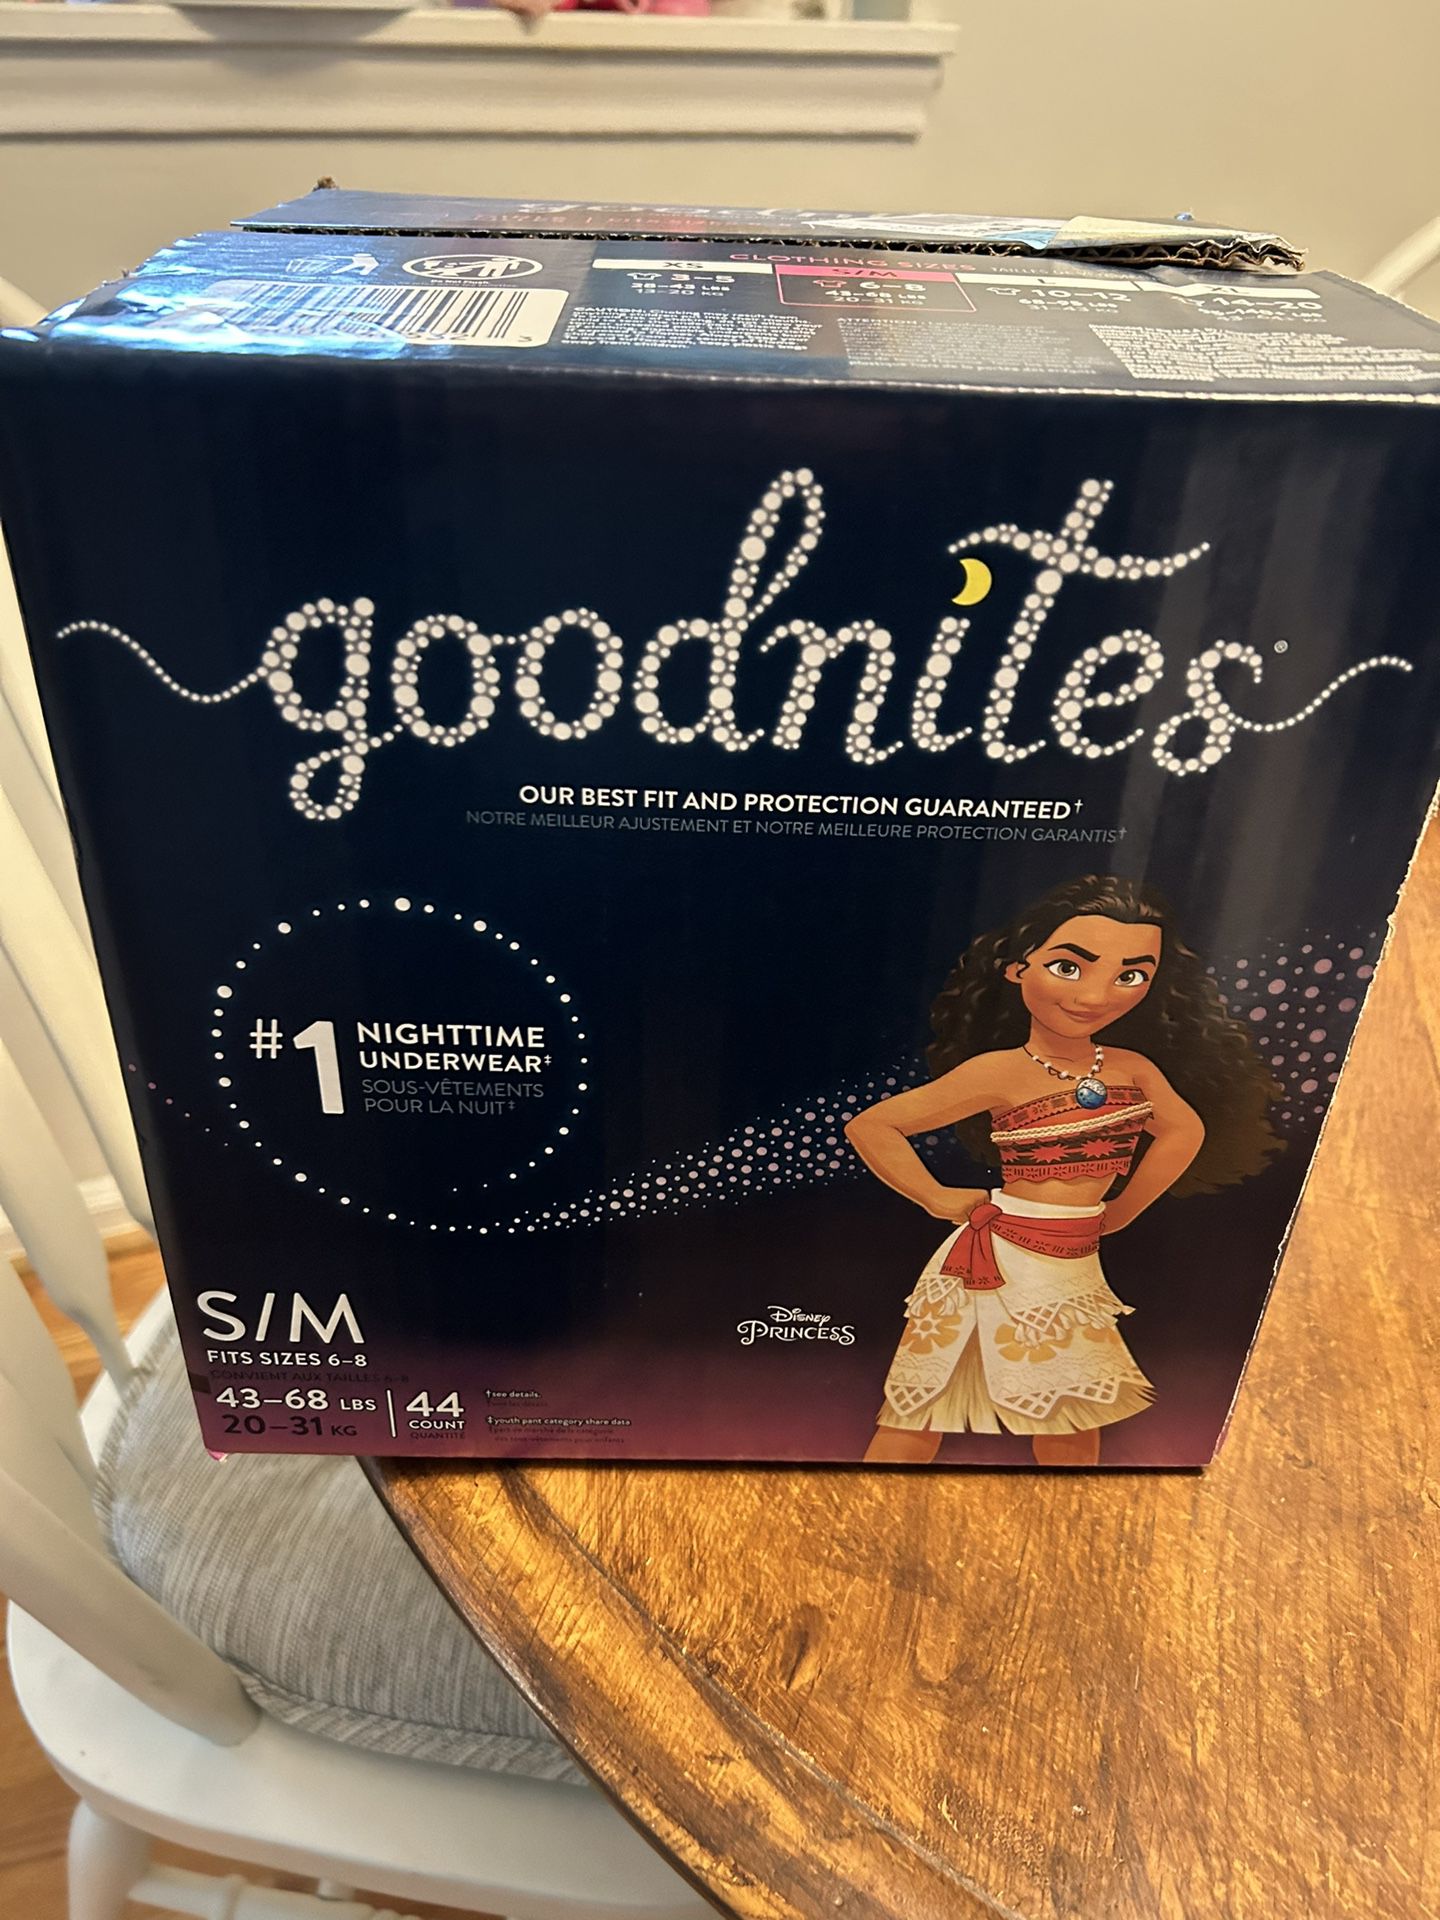 Goodnites Size S-m